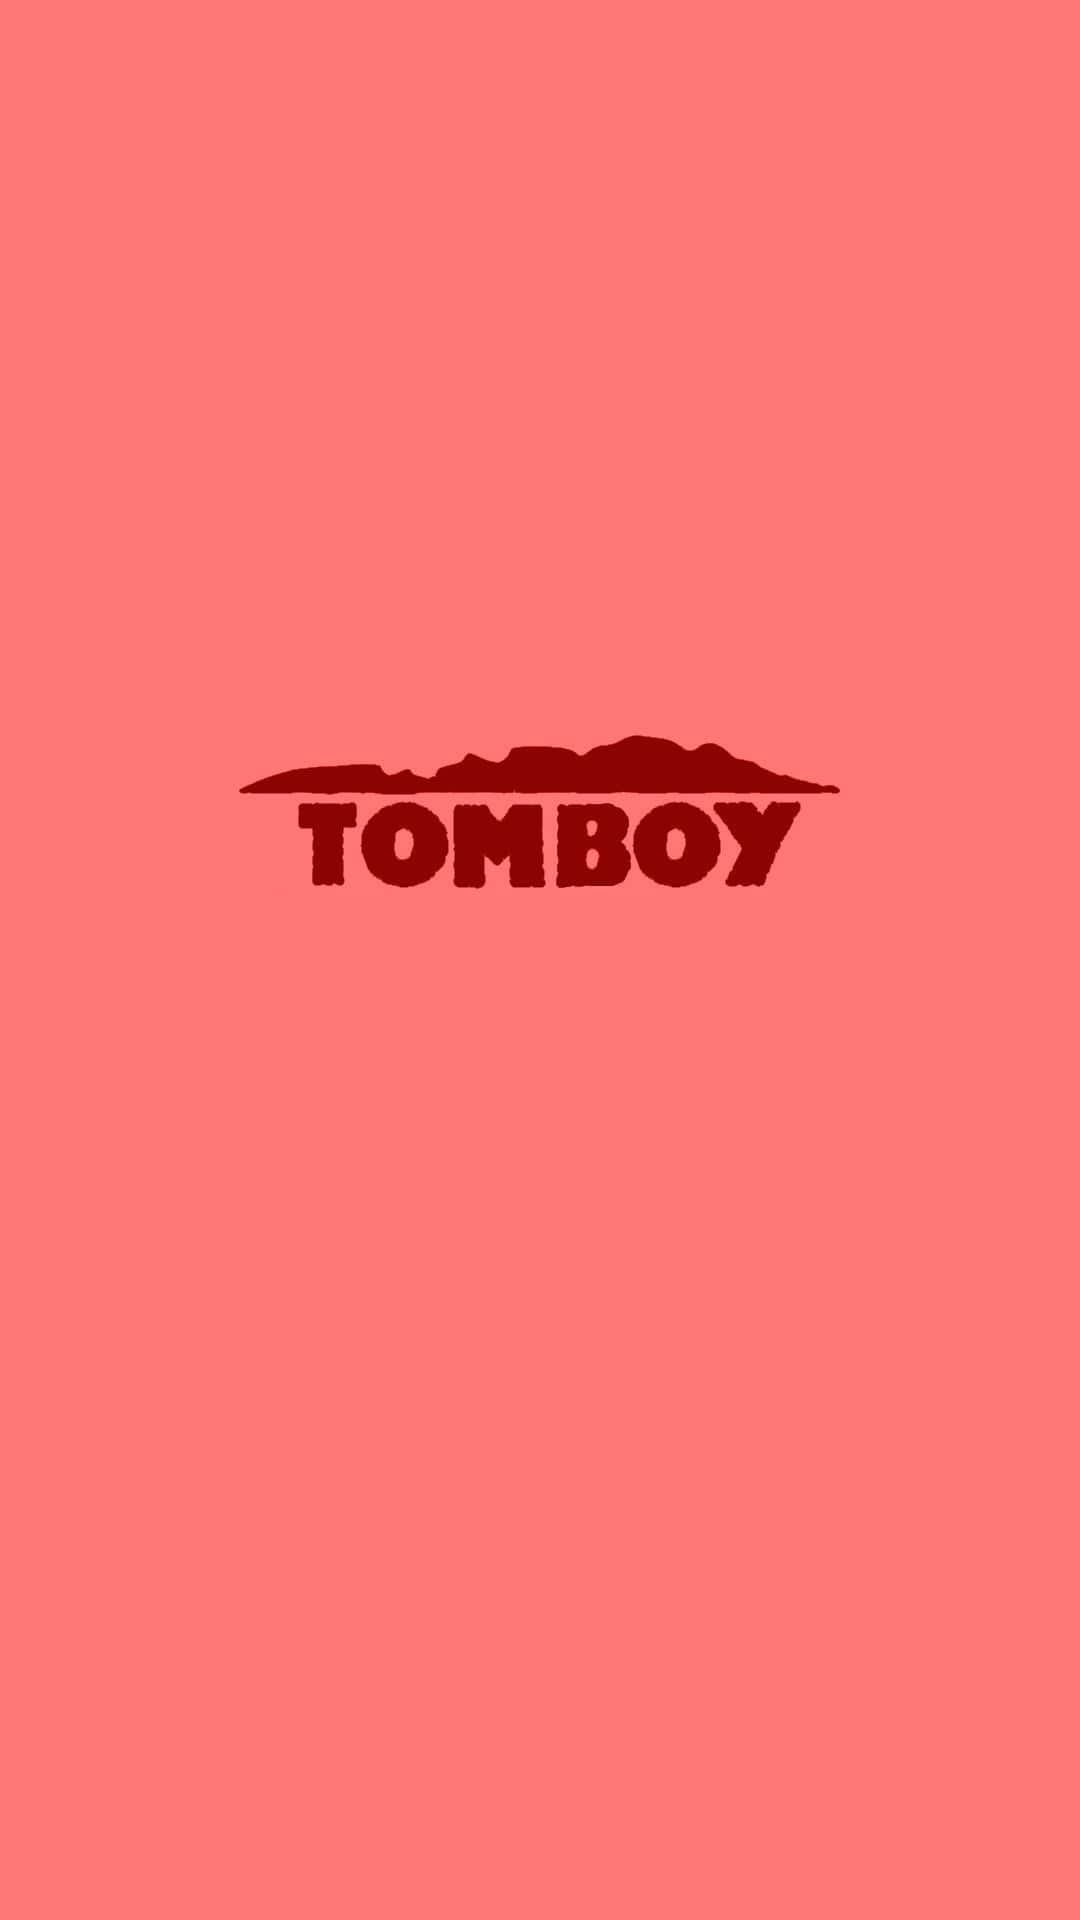 Tomboy Aesthetic Wallpapers  Top Free Tomboy Aesthetic Backgrounds   WallpaperAccess